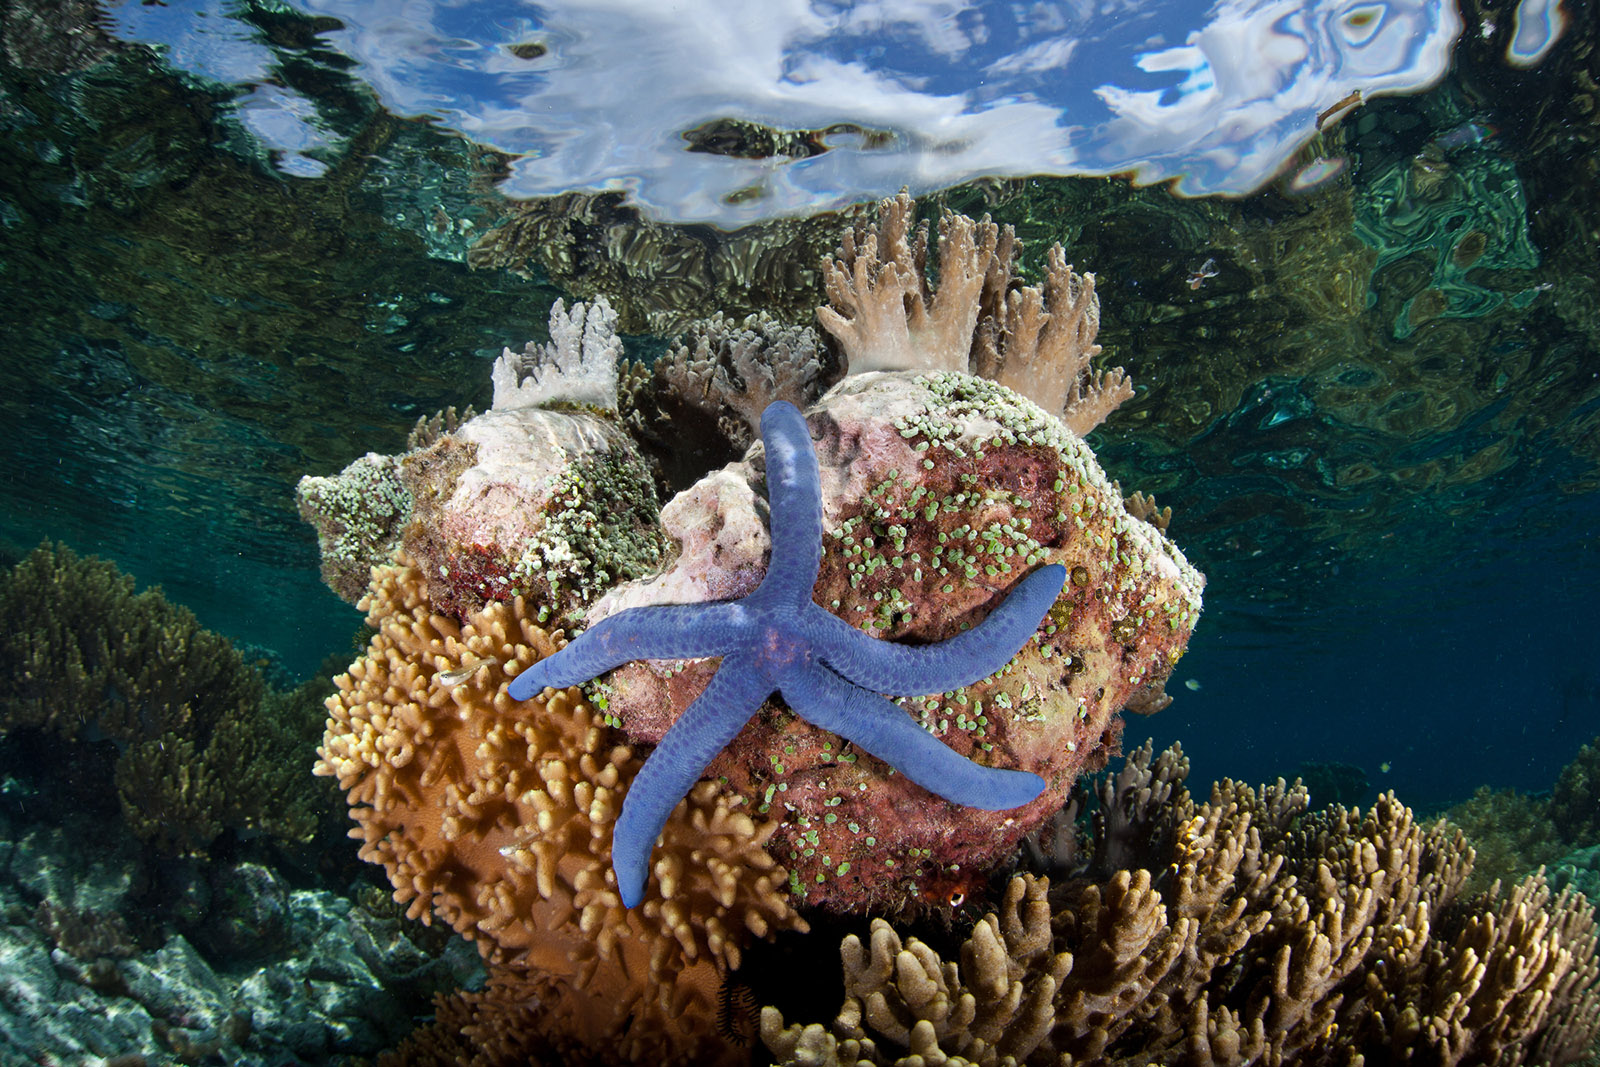 A blue sea star clinging to a coral head where coralline algae, tunicates, and soft leather corals grow, Batanta Island, Indonesia